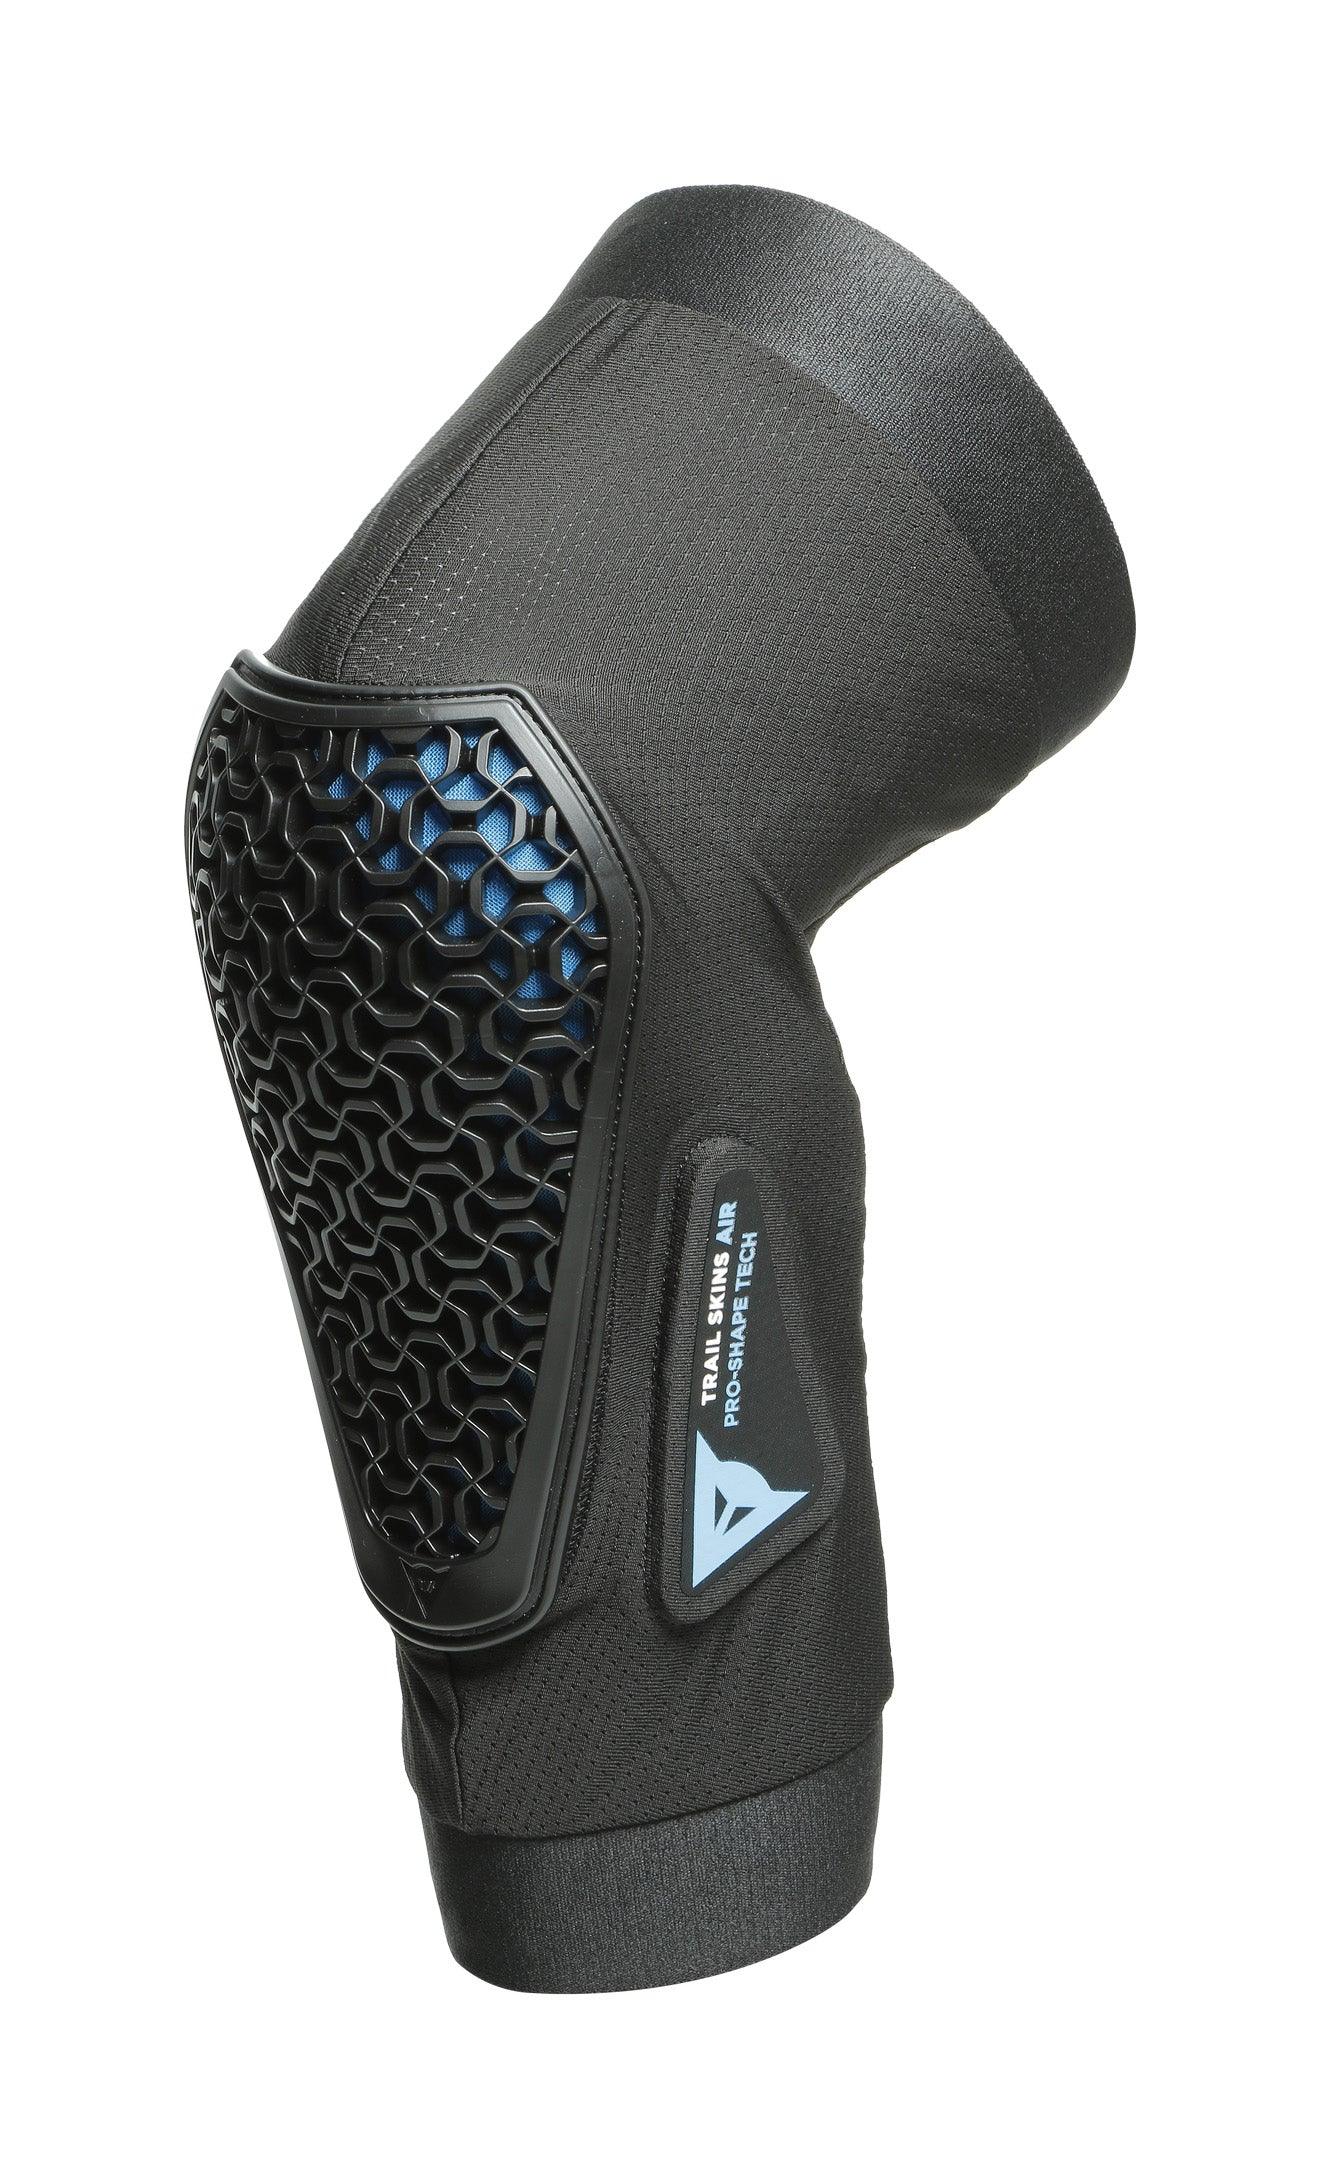 Dainese Trail Skins Air Knee Guard - Sprocket & Gear